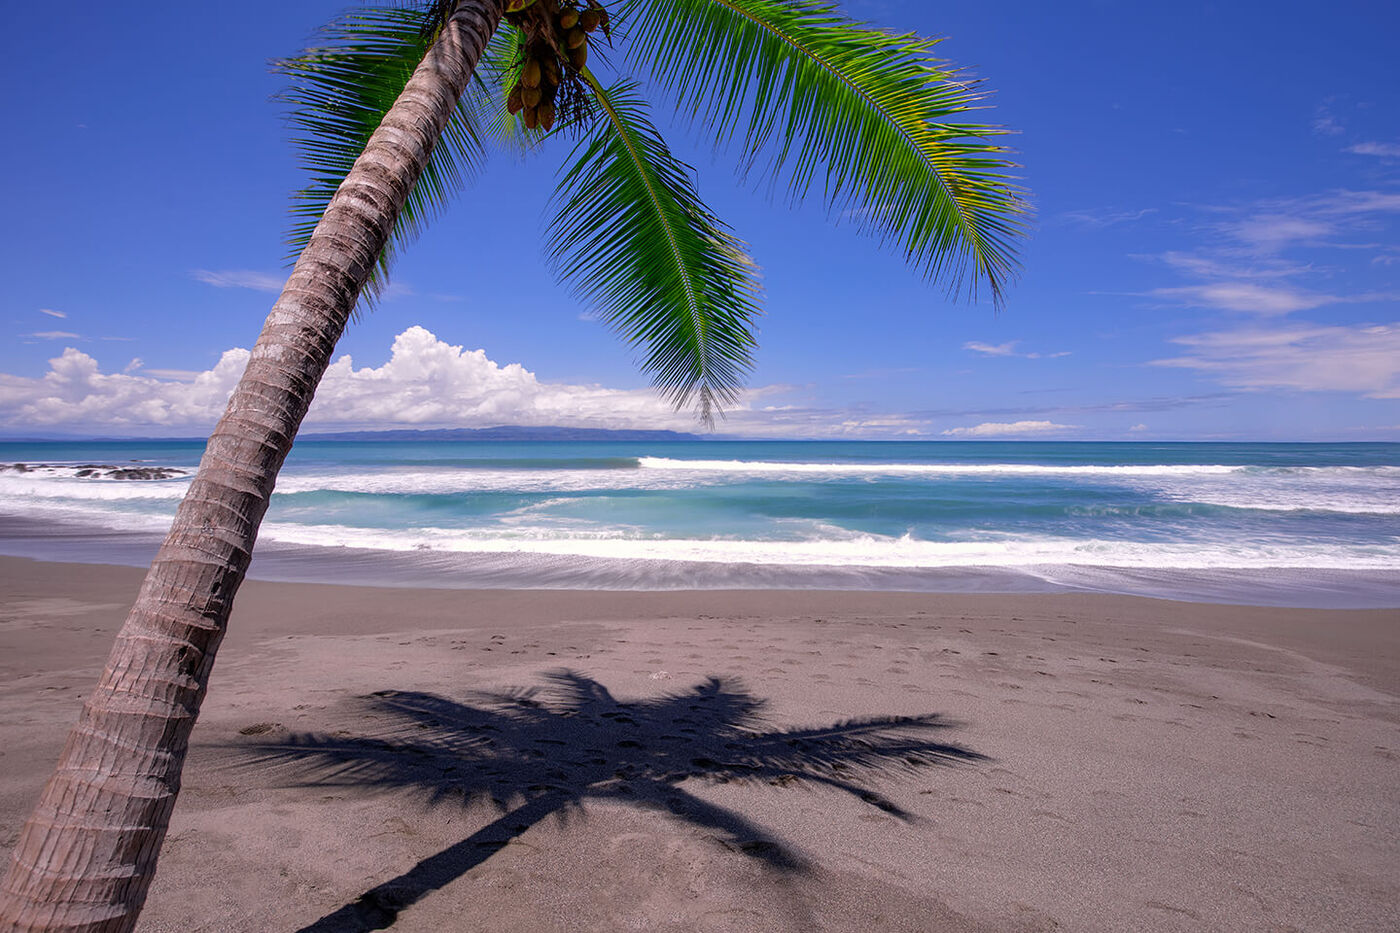 Beach with cocnut tree